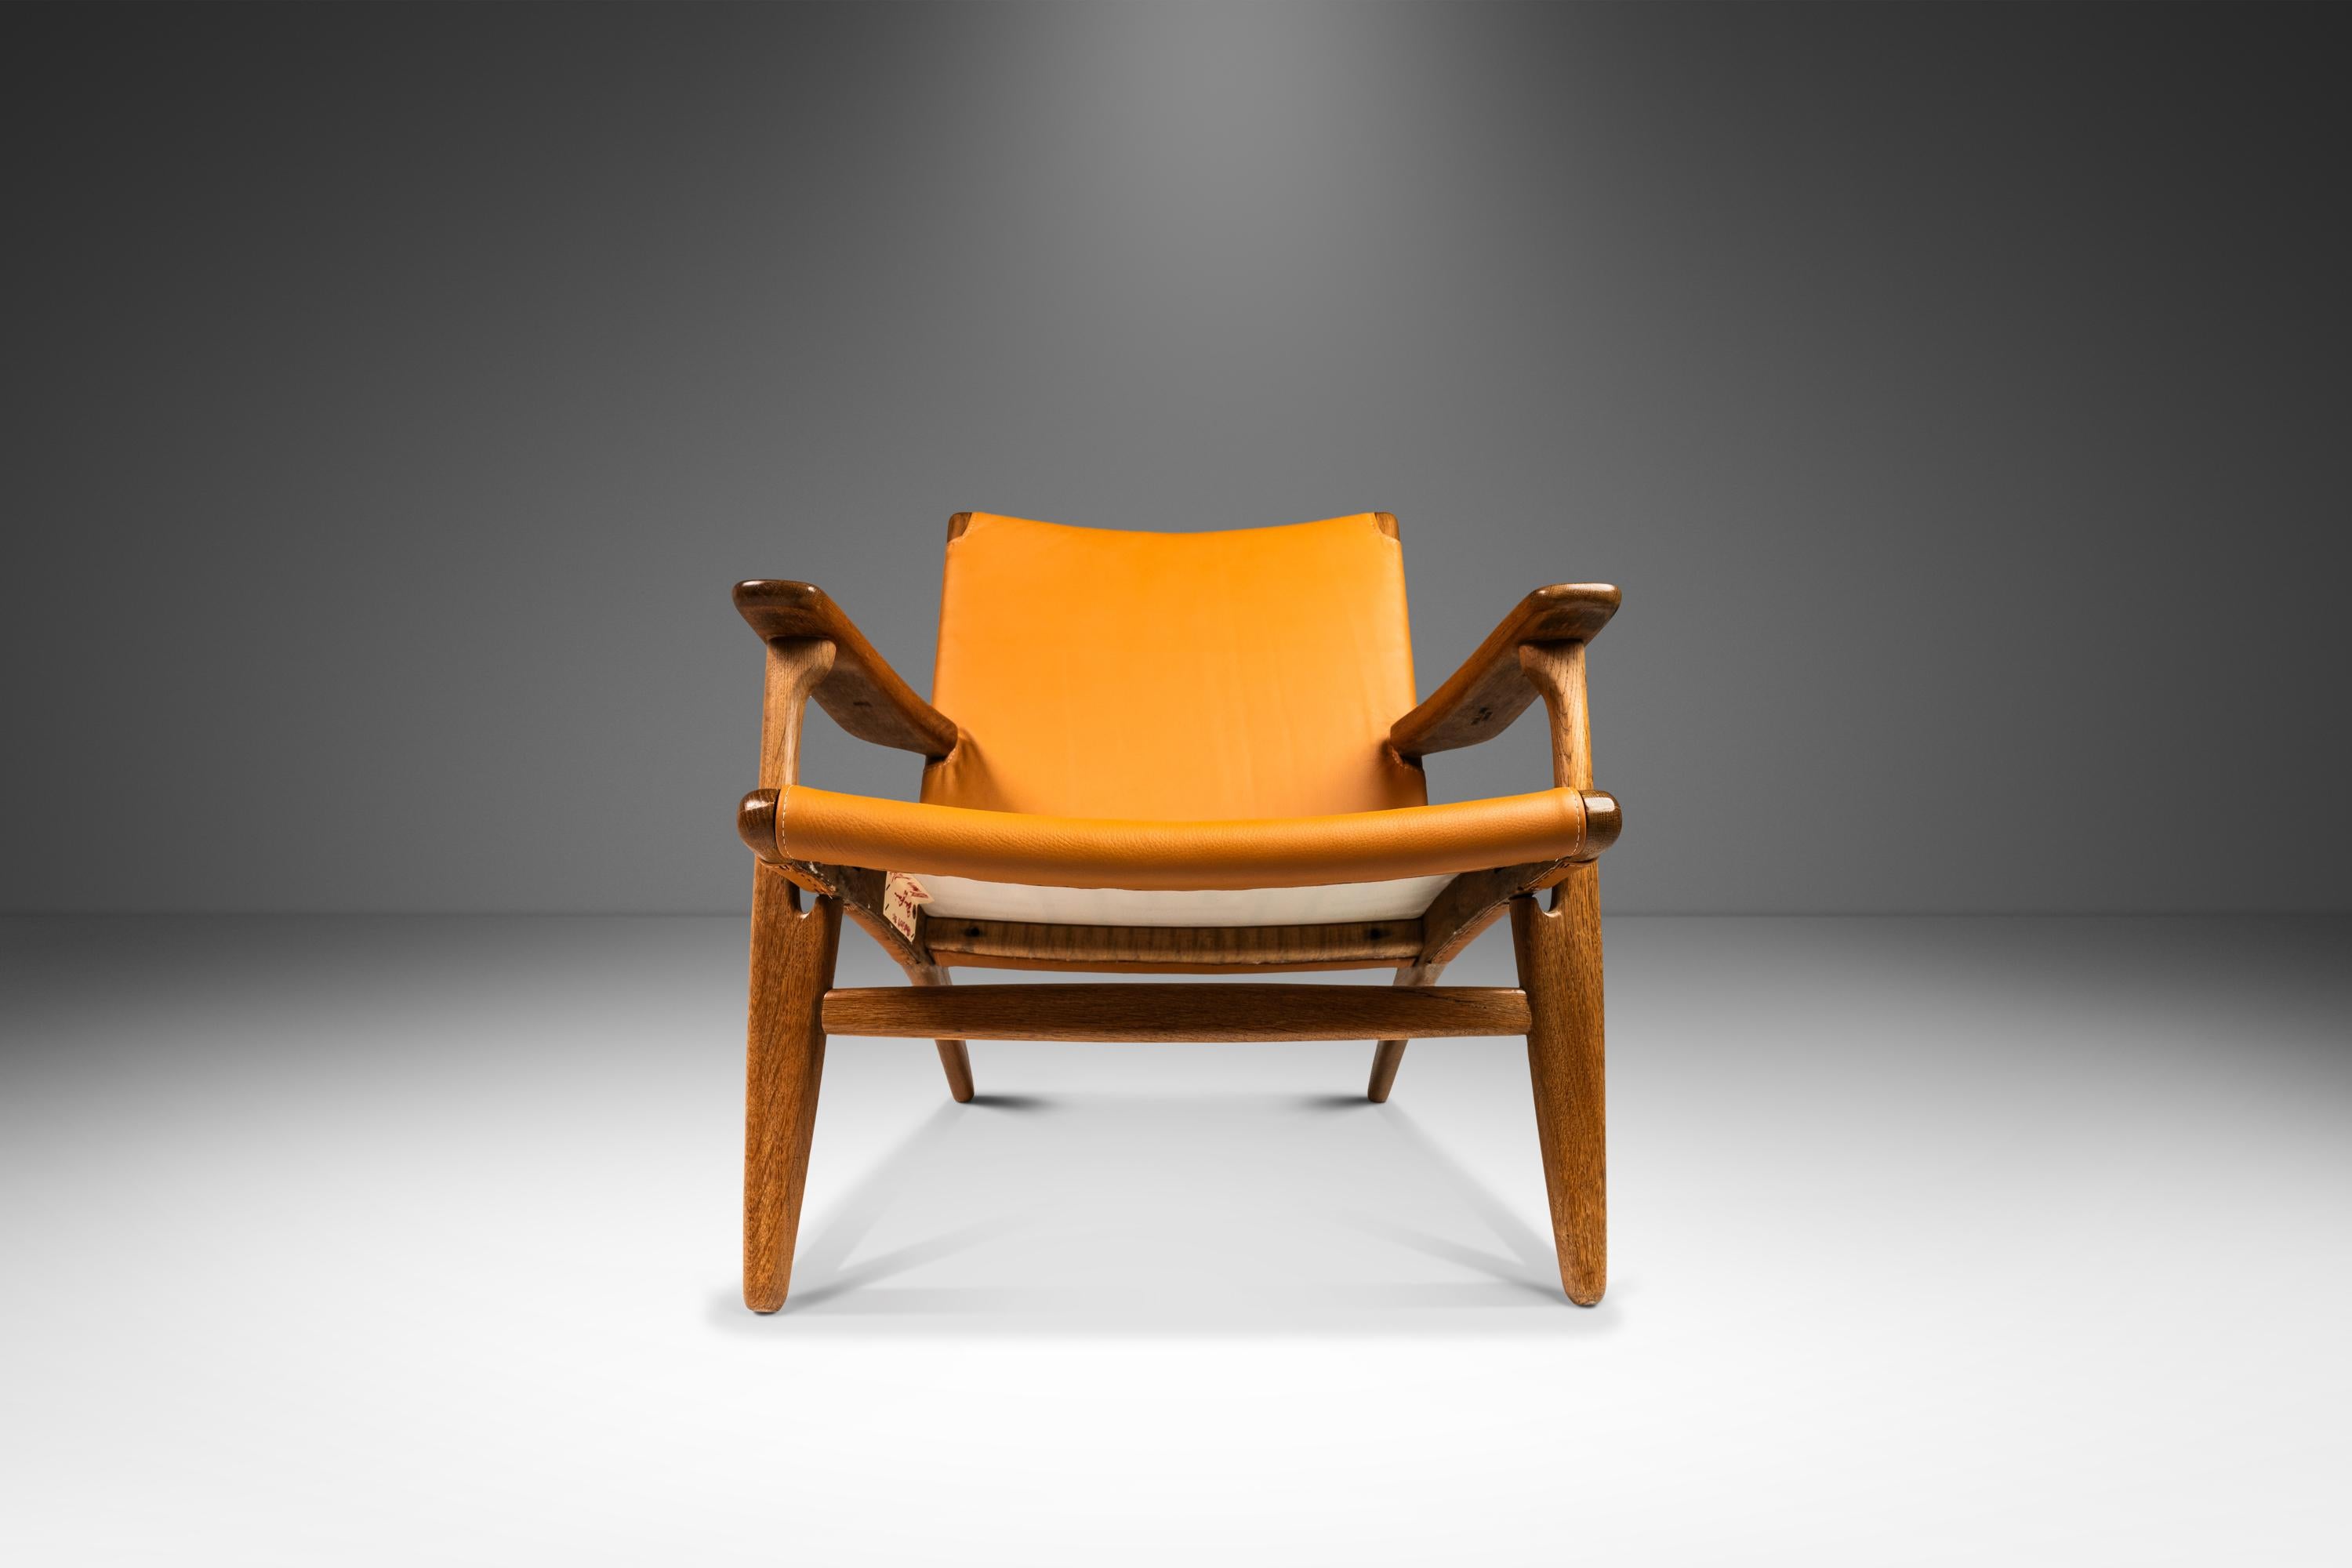  Danish Mid-Century CH 25 Lounge Chair by Hans J. Wegner, Oak & Leather, c. 1950 For Sale 9